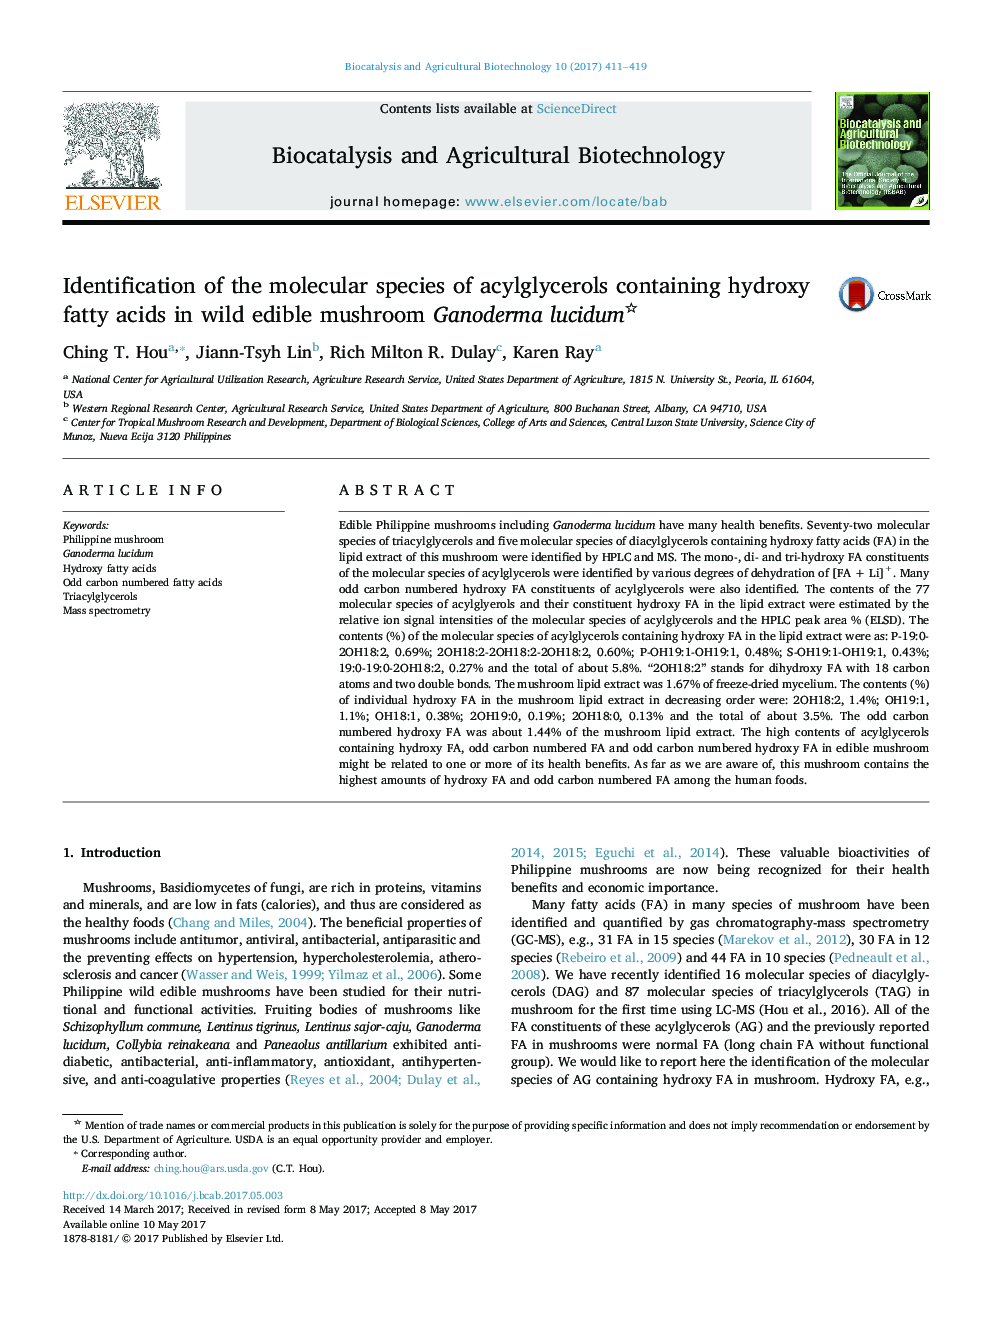 Identification of the molecular species of acylglycerols containing hydroxy fatty acids in wild edible mushroom Ganoderma lucidum